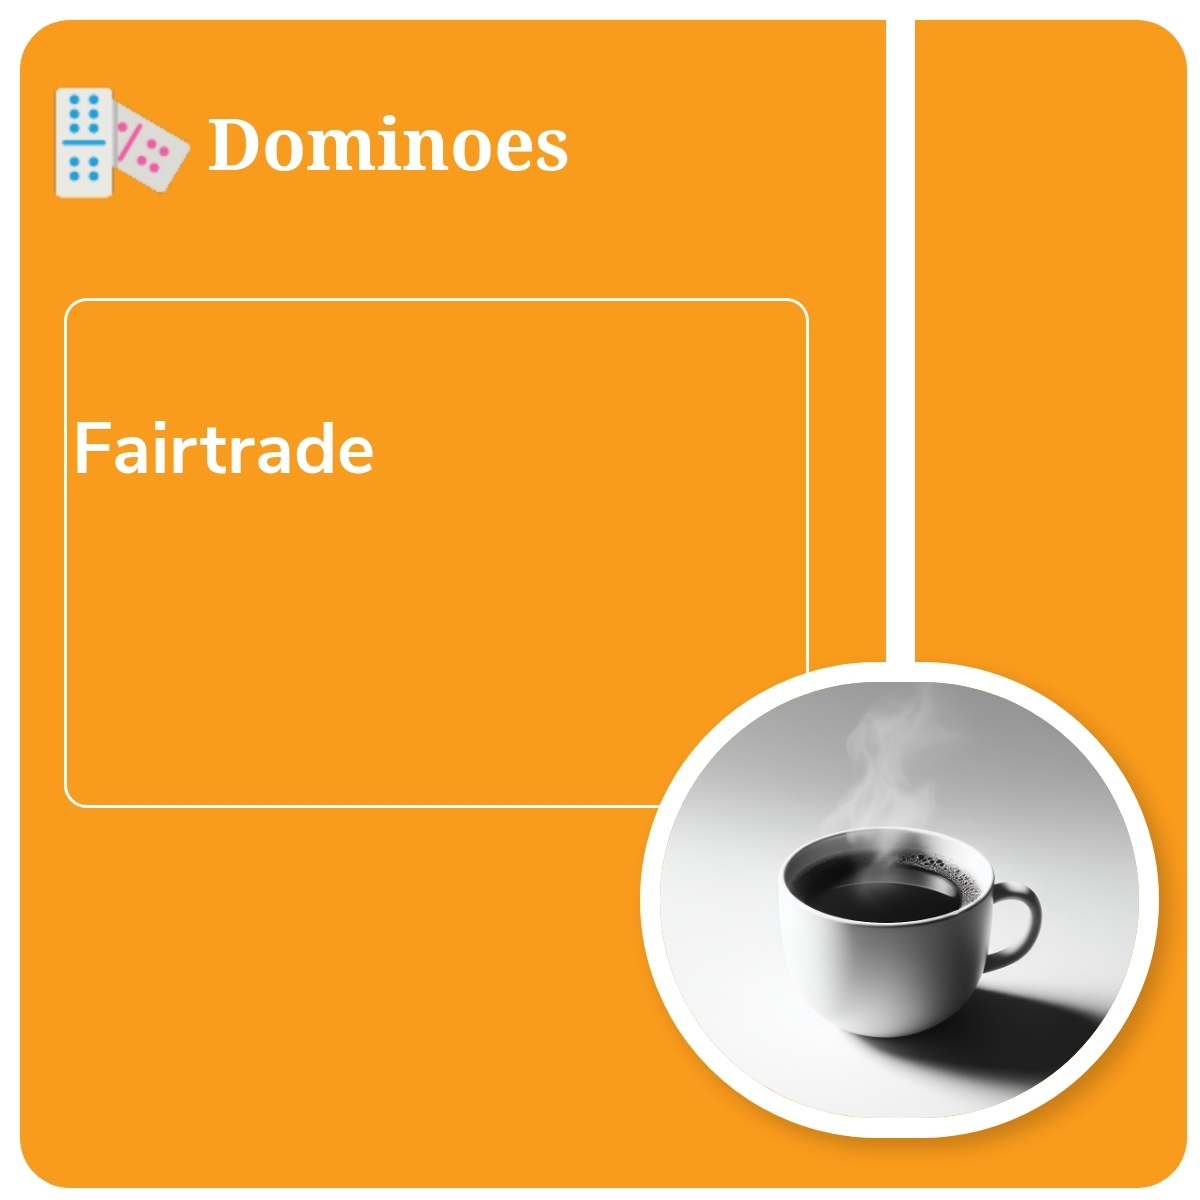 Dúradáin - Cluiche 2: Fairtrade